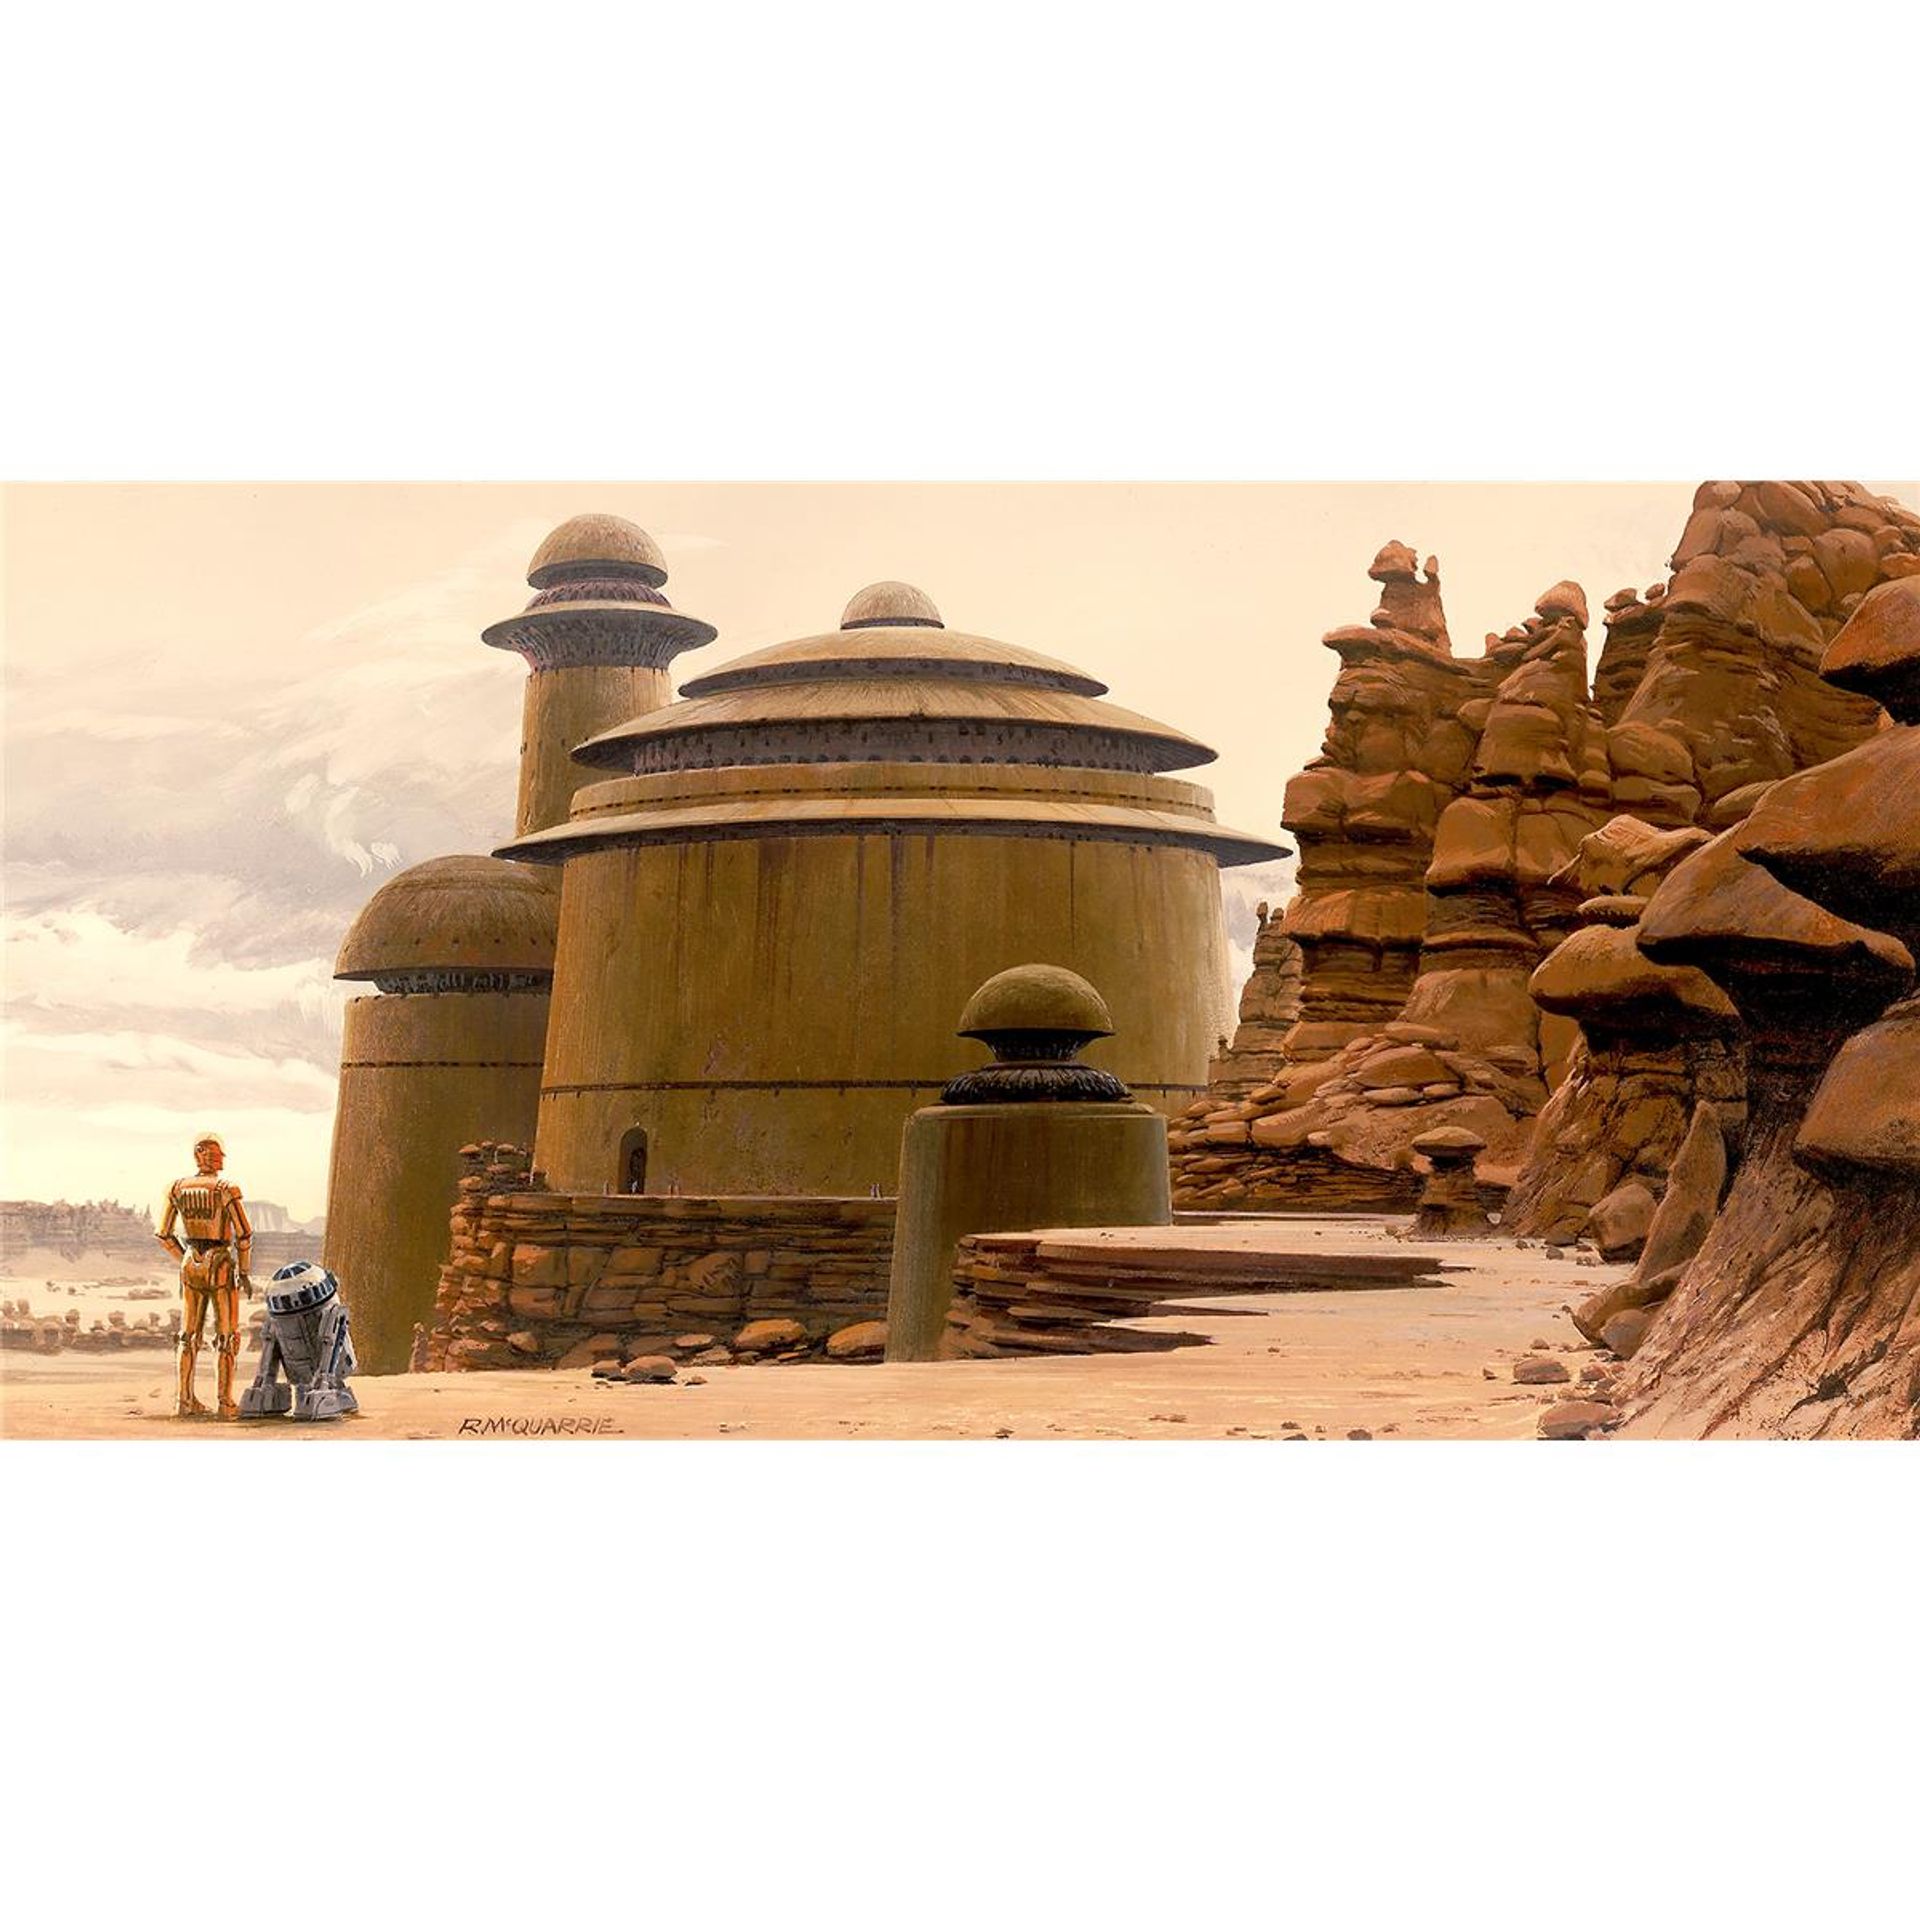 Vlies Fototapete - Star Wars Classic RMQ Jabbas Palace - Größe 500 x 250 cm